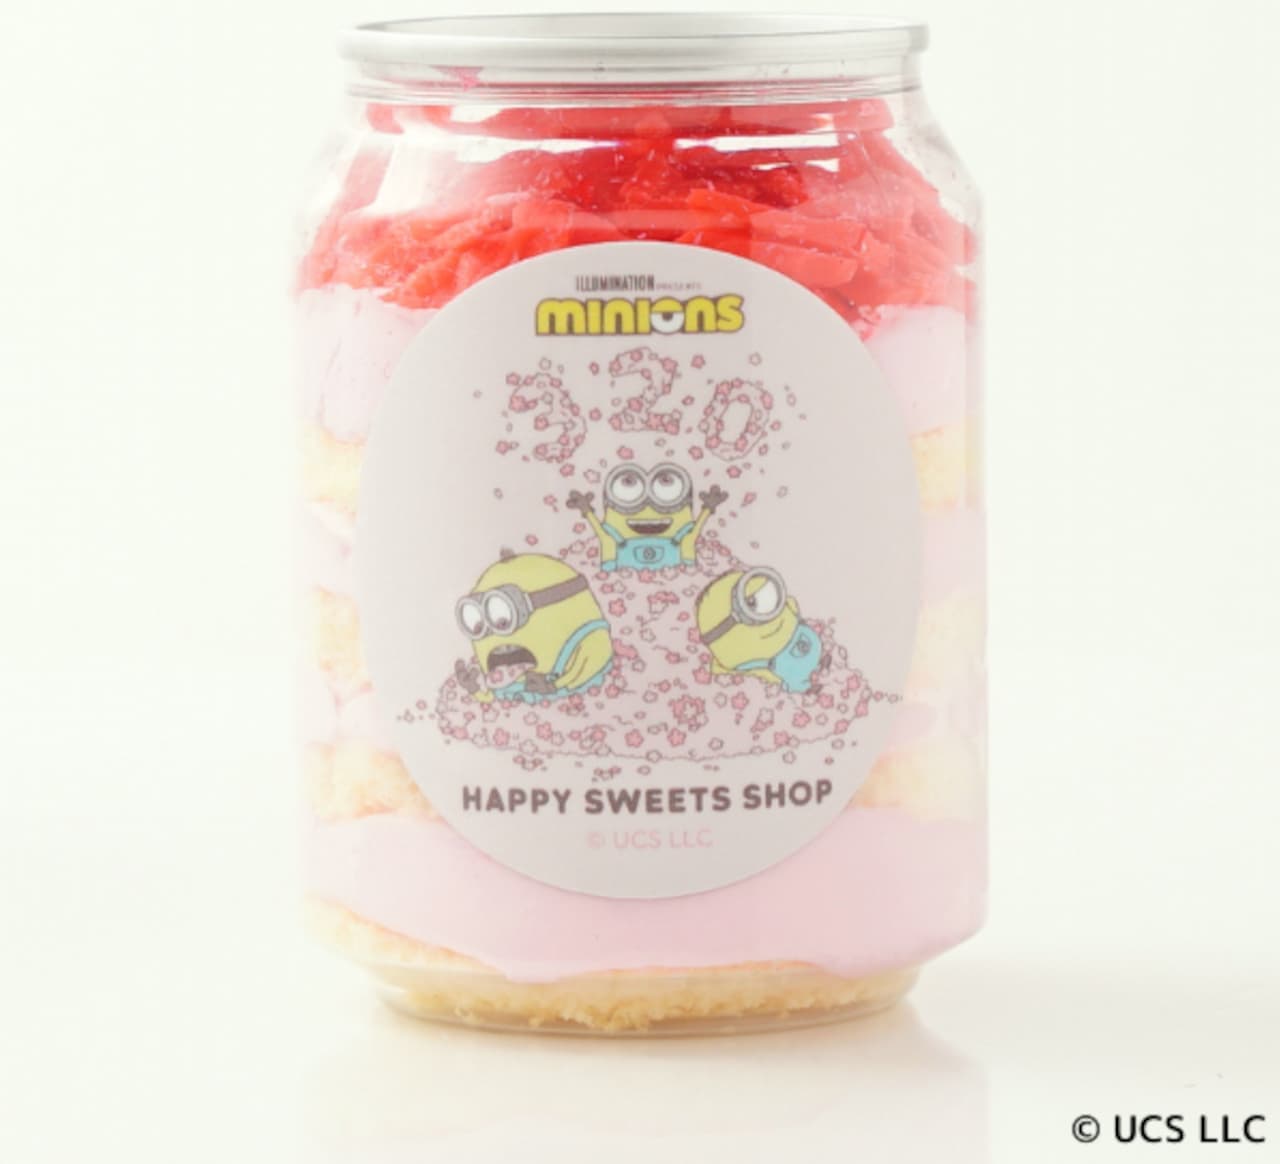 Minion Happy Sweets Shop "Original Cake Tin